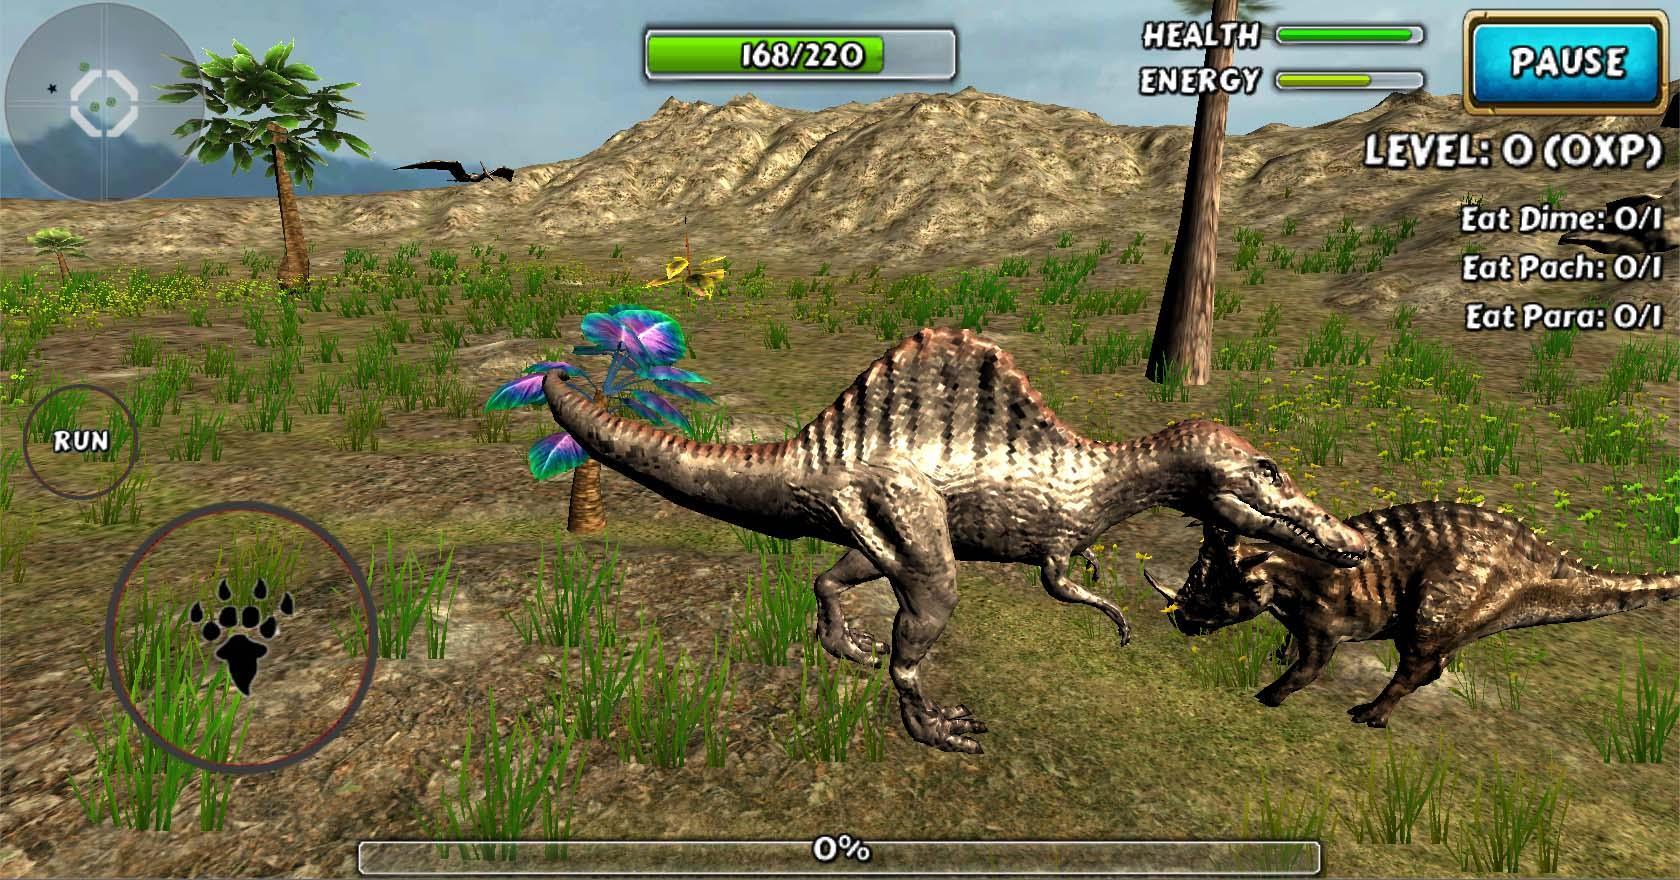 Roblox Dinosaur Simulator Discord